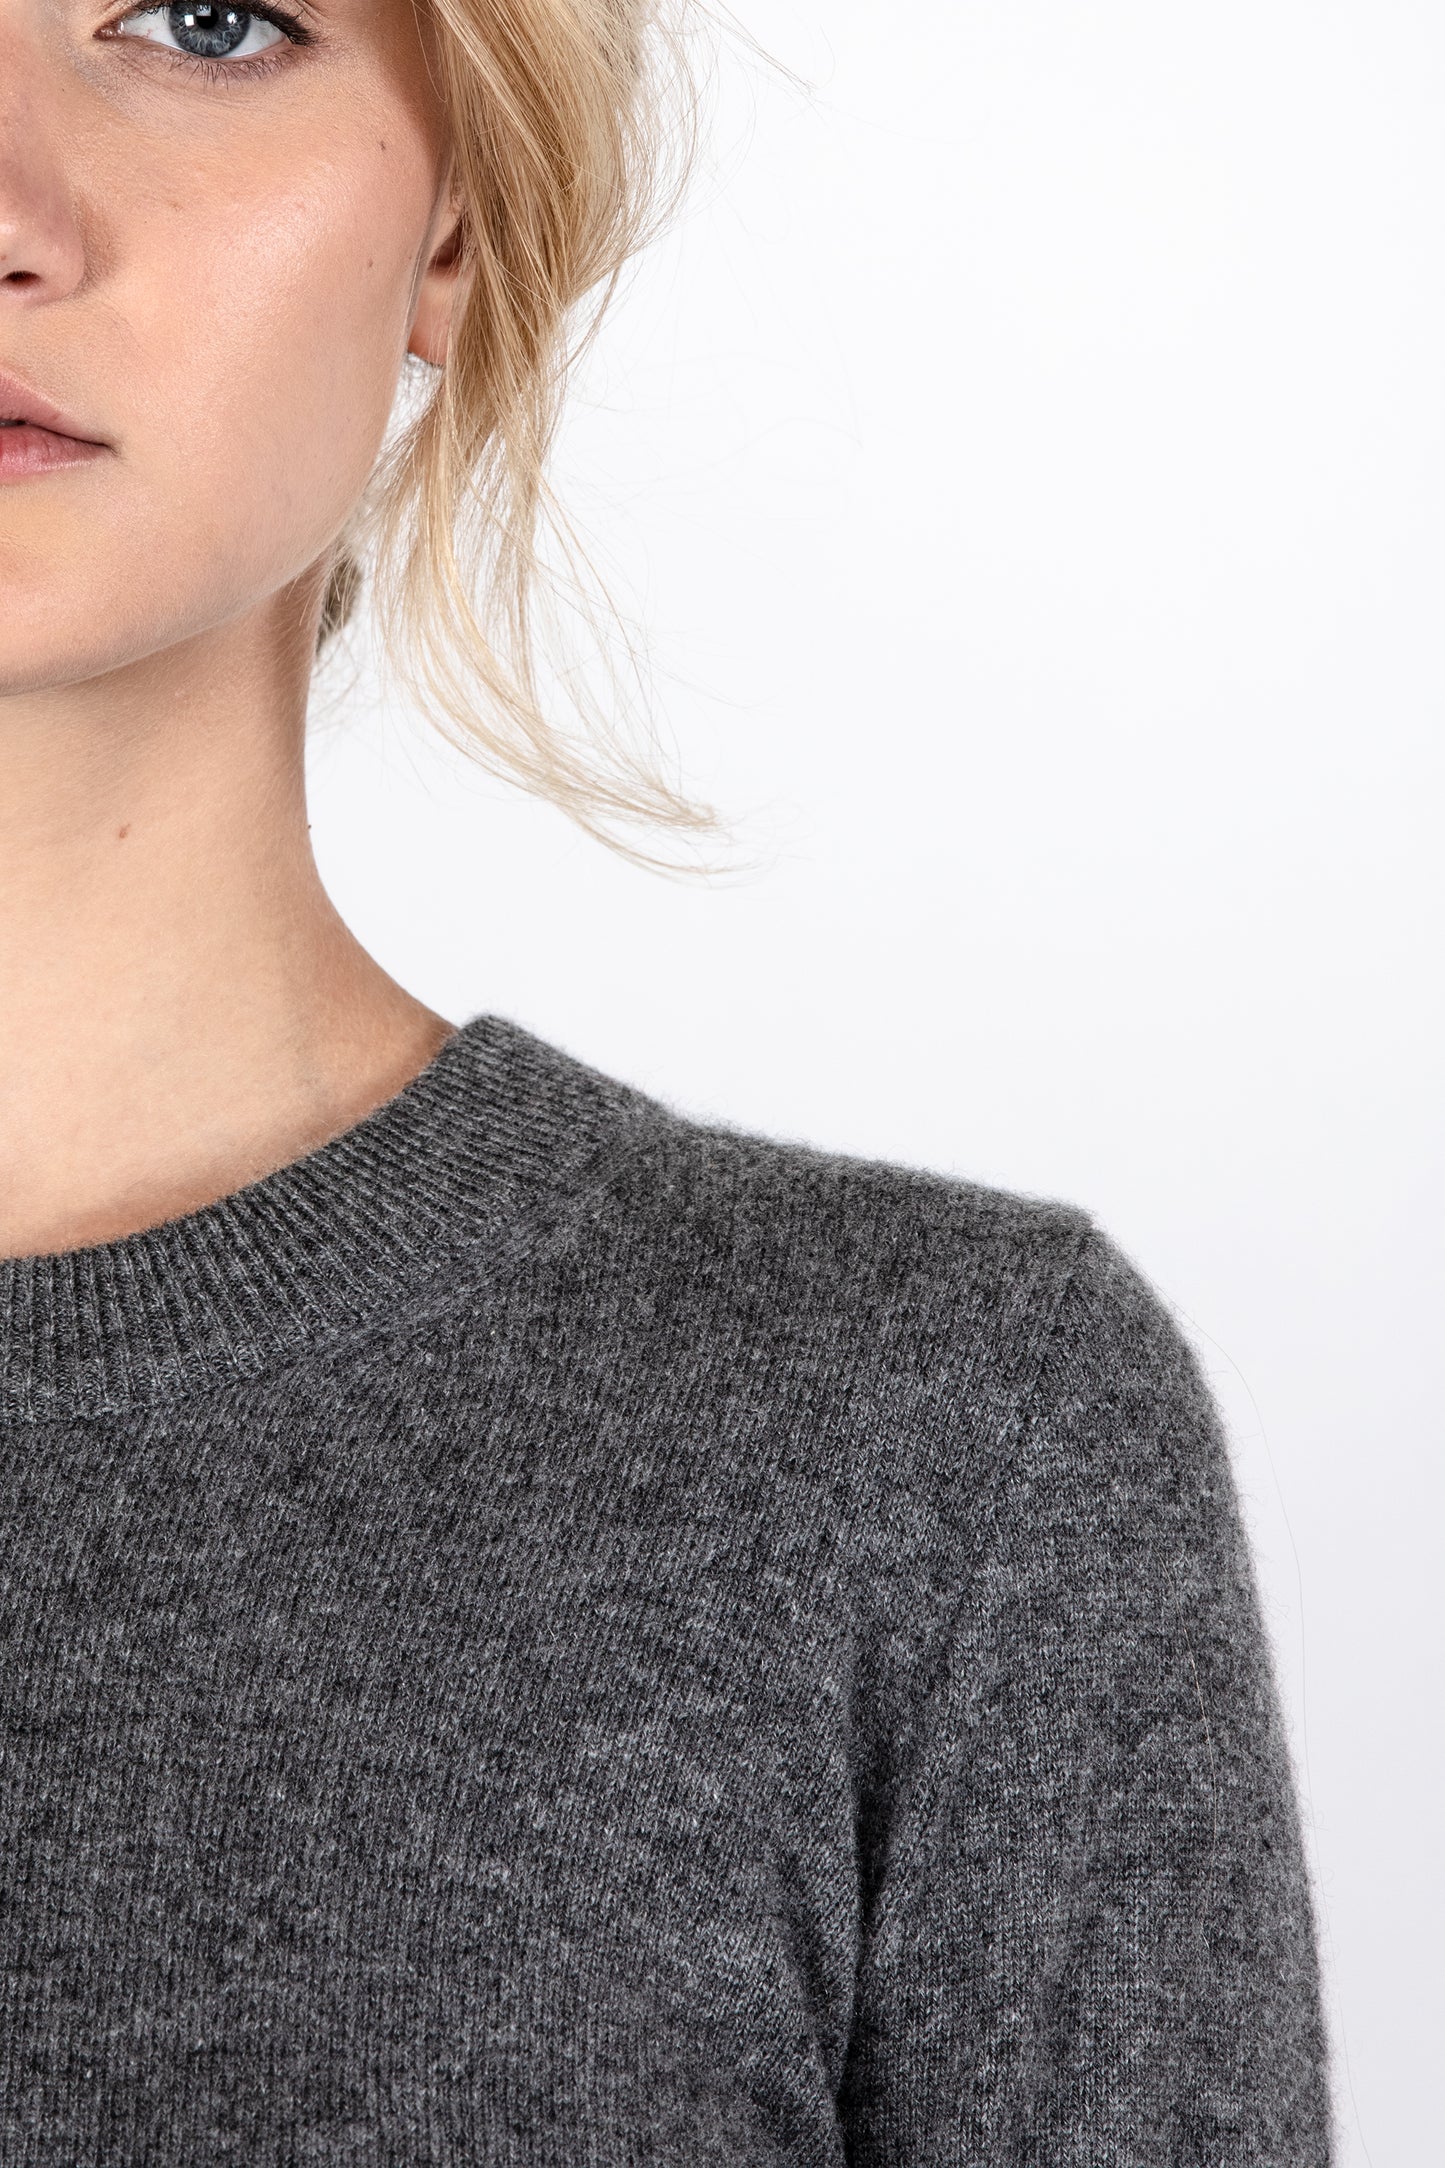 JENNIE LIU Women's 100% Pure Cashmere Long Sleeve Crew Neck Sweater